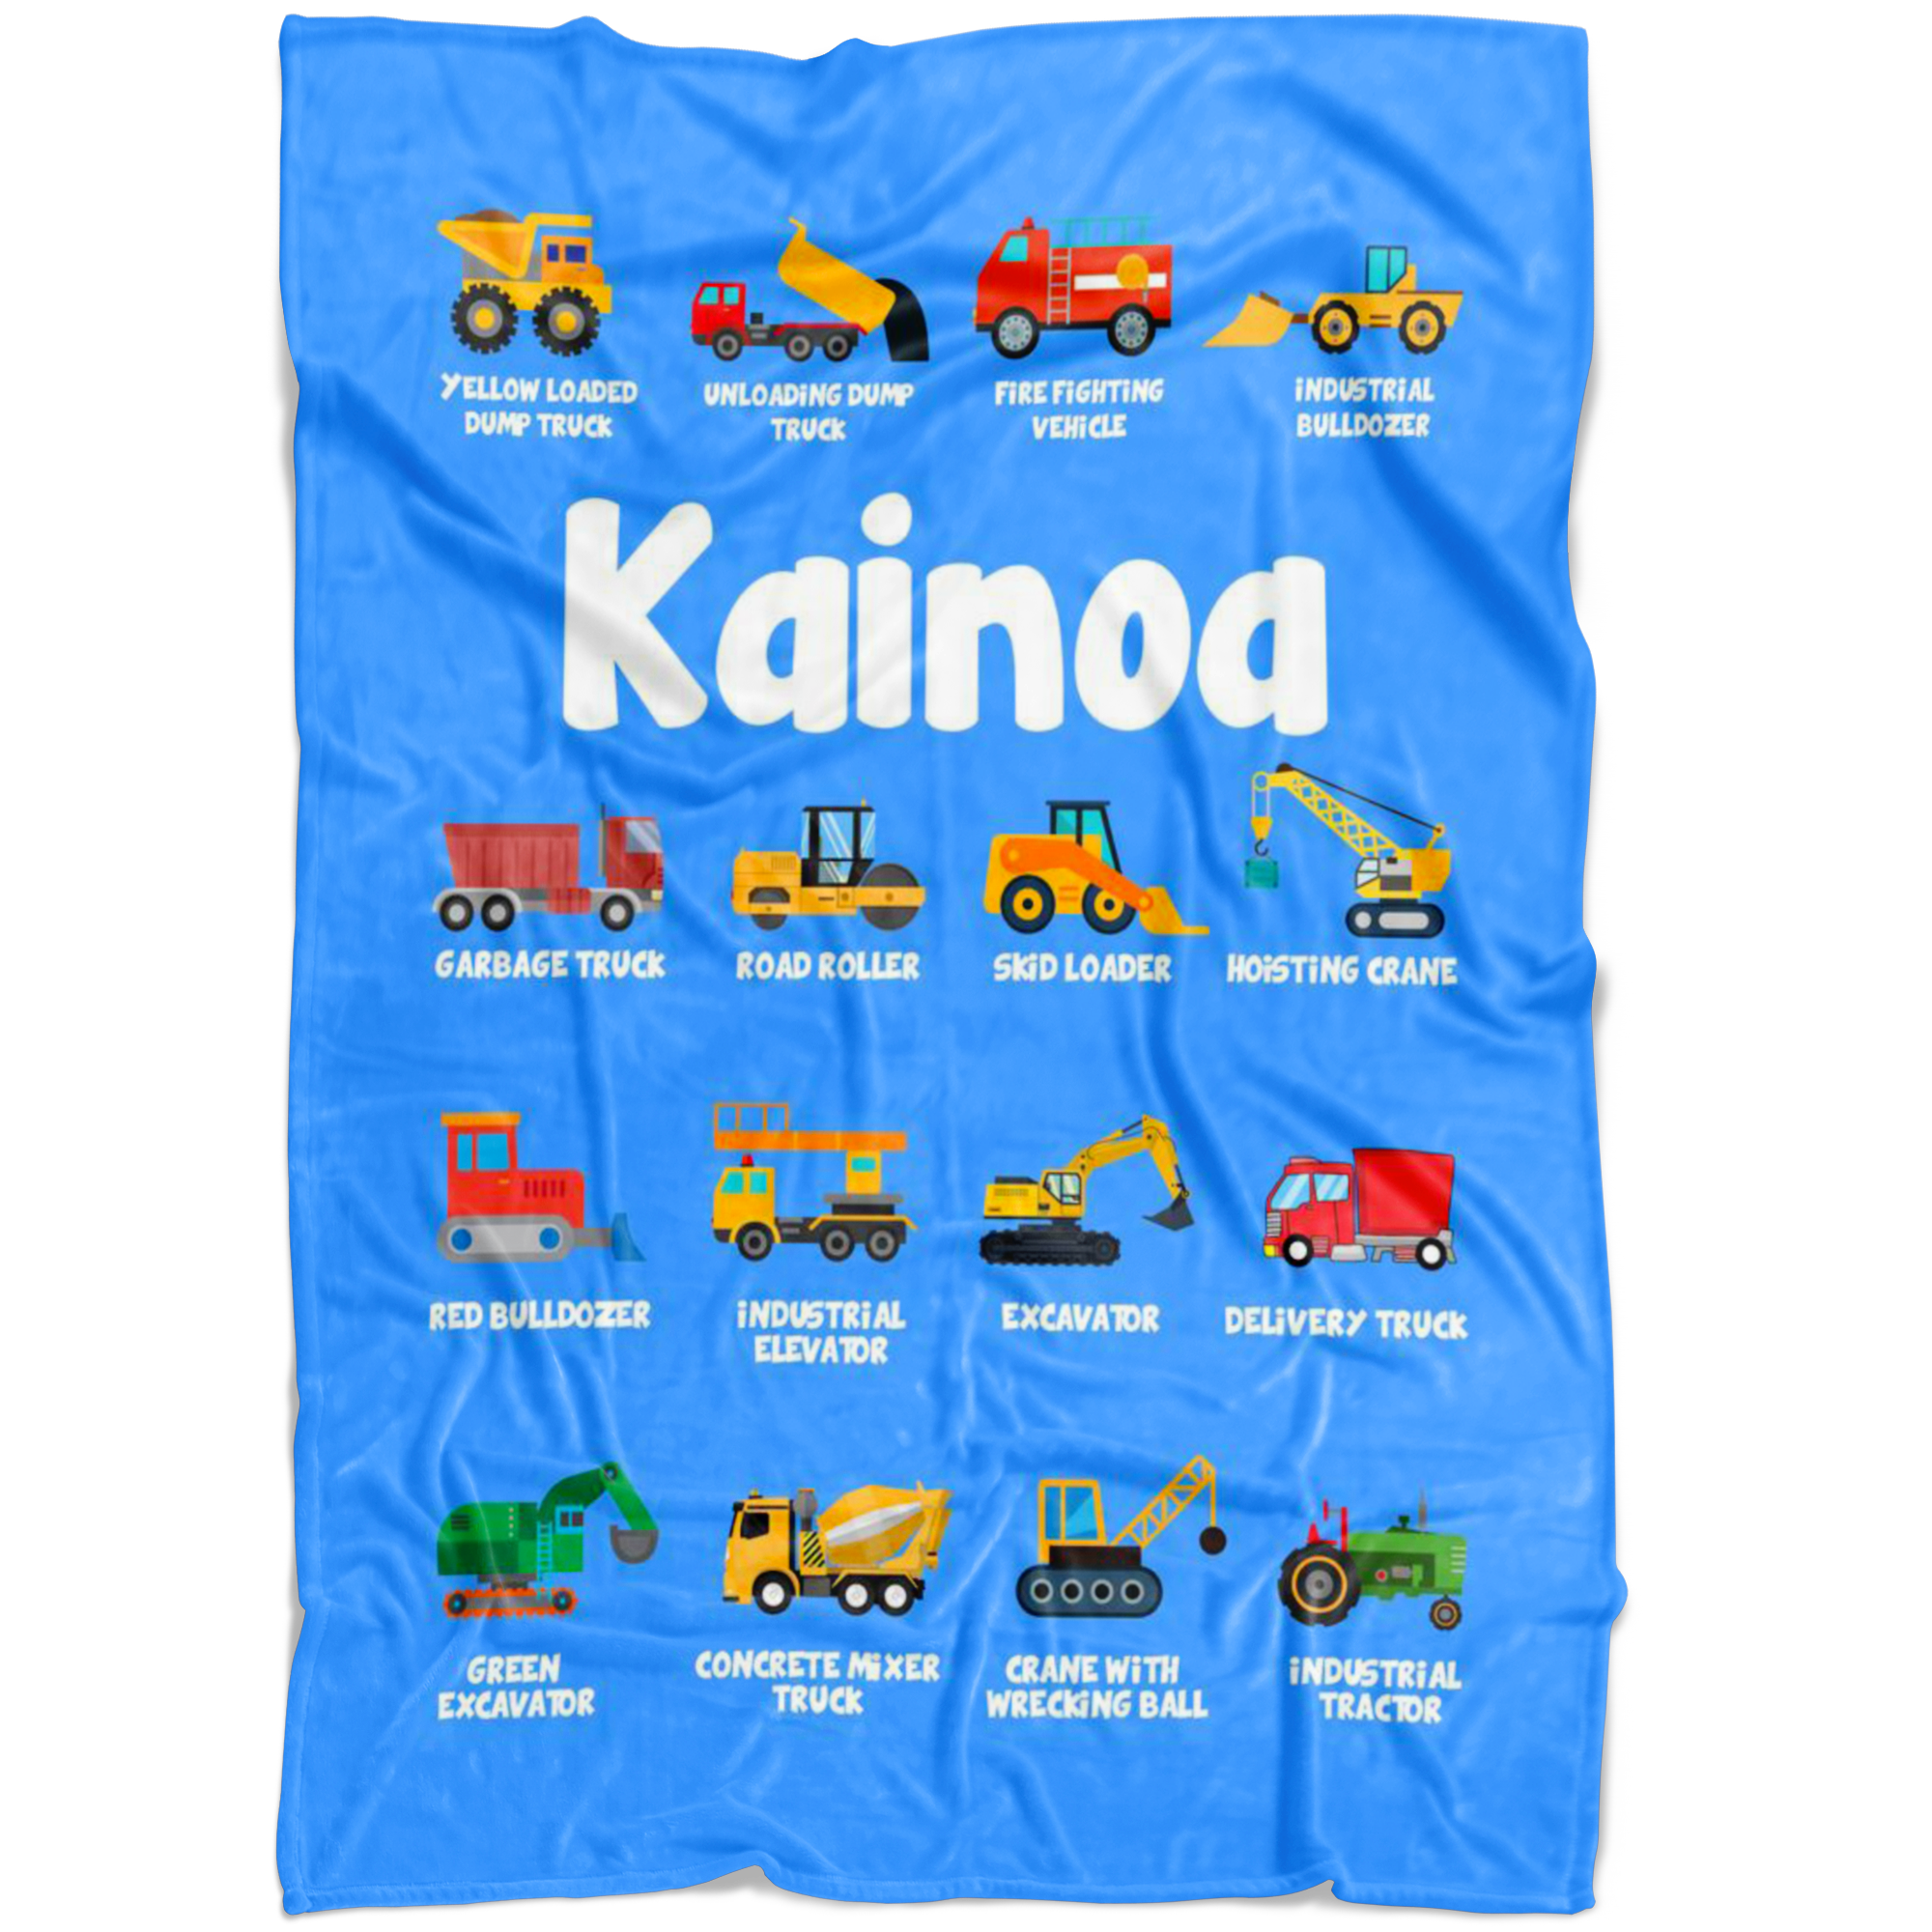 Kainoa Construction Blanket Blue